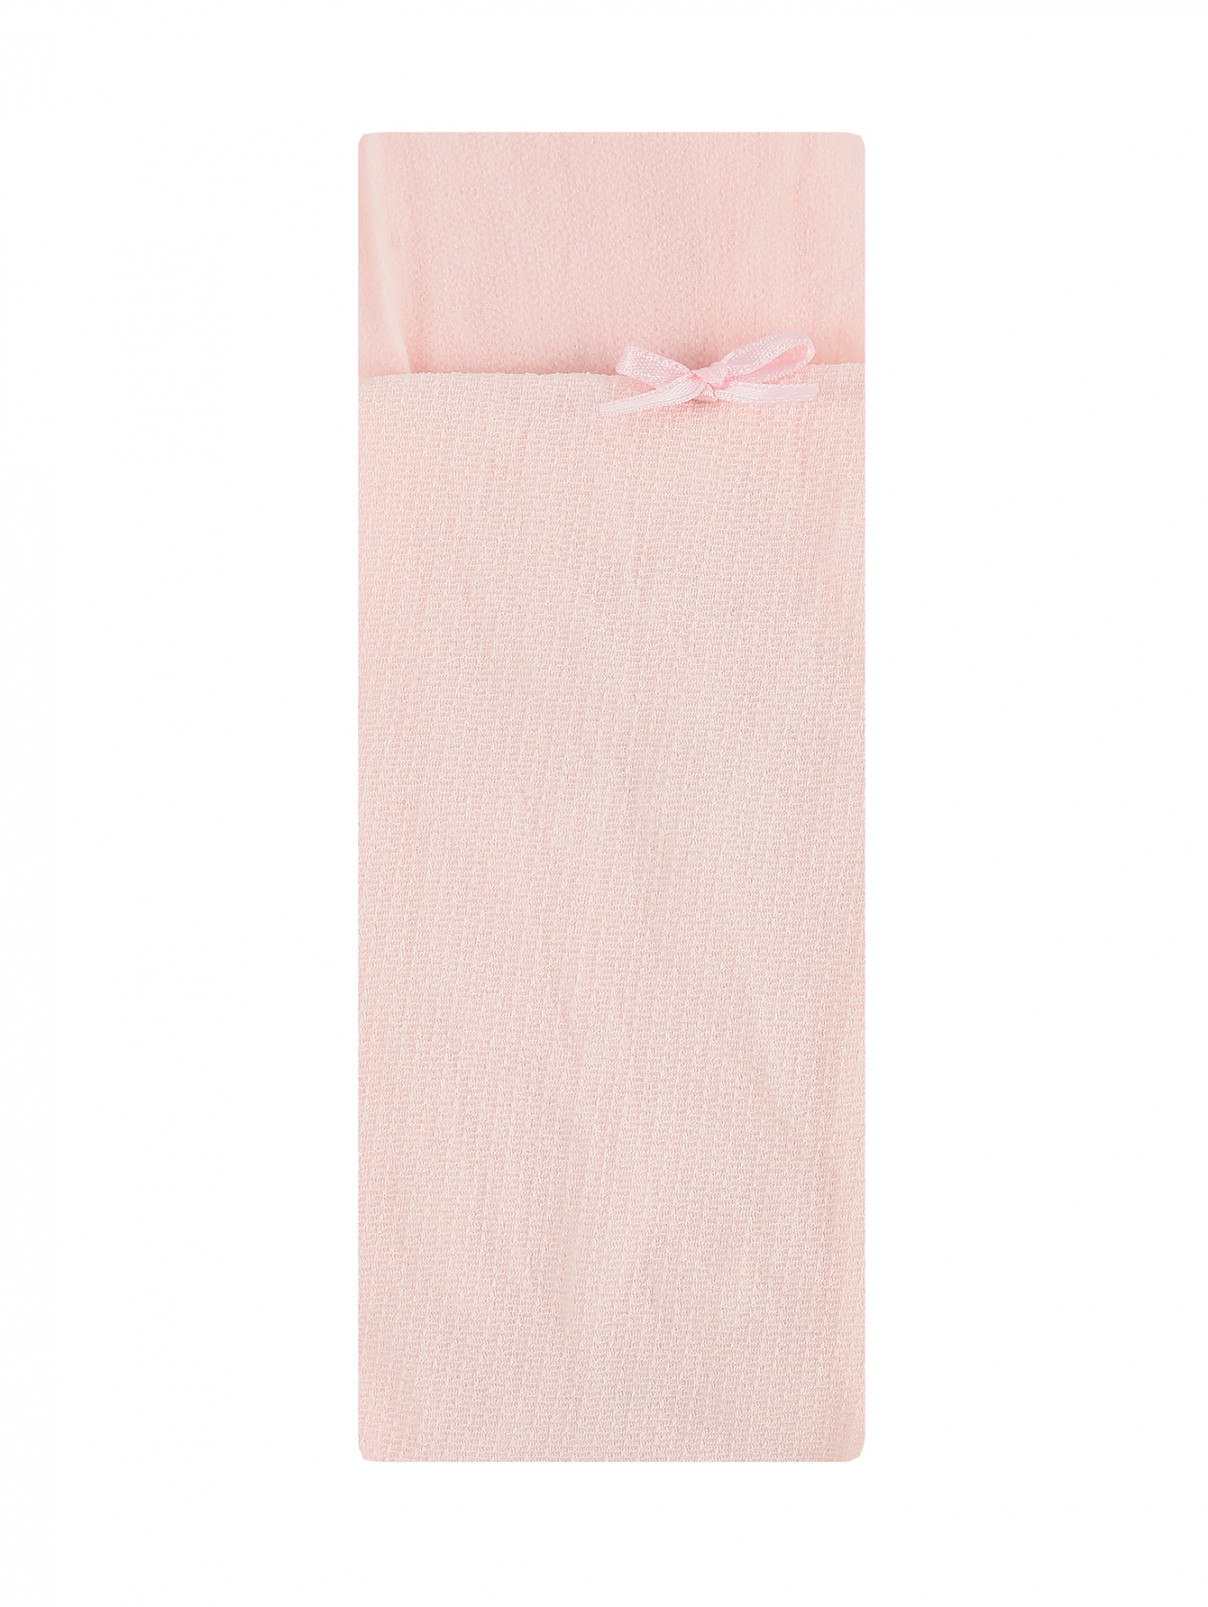 Колготки с бантиками I Pinco Pallino  –  Общий вид  – Цвет:  Розовый